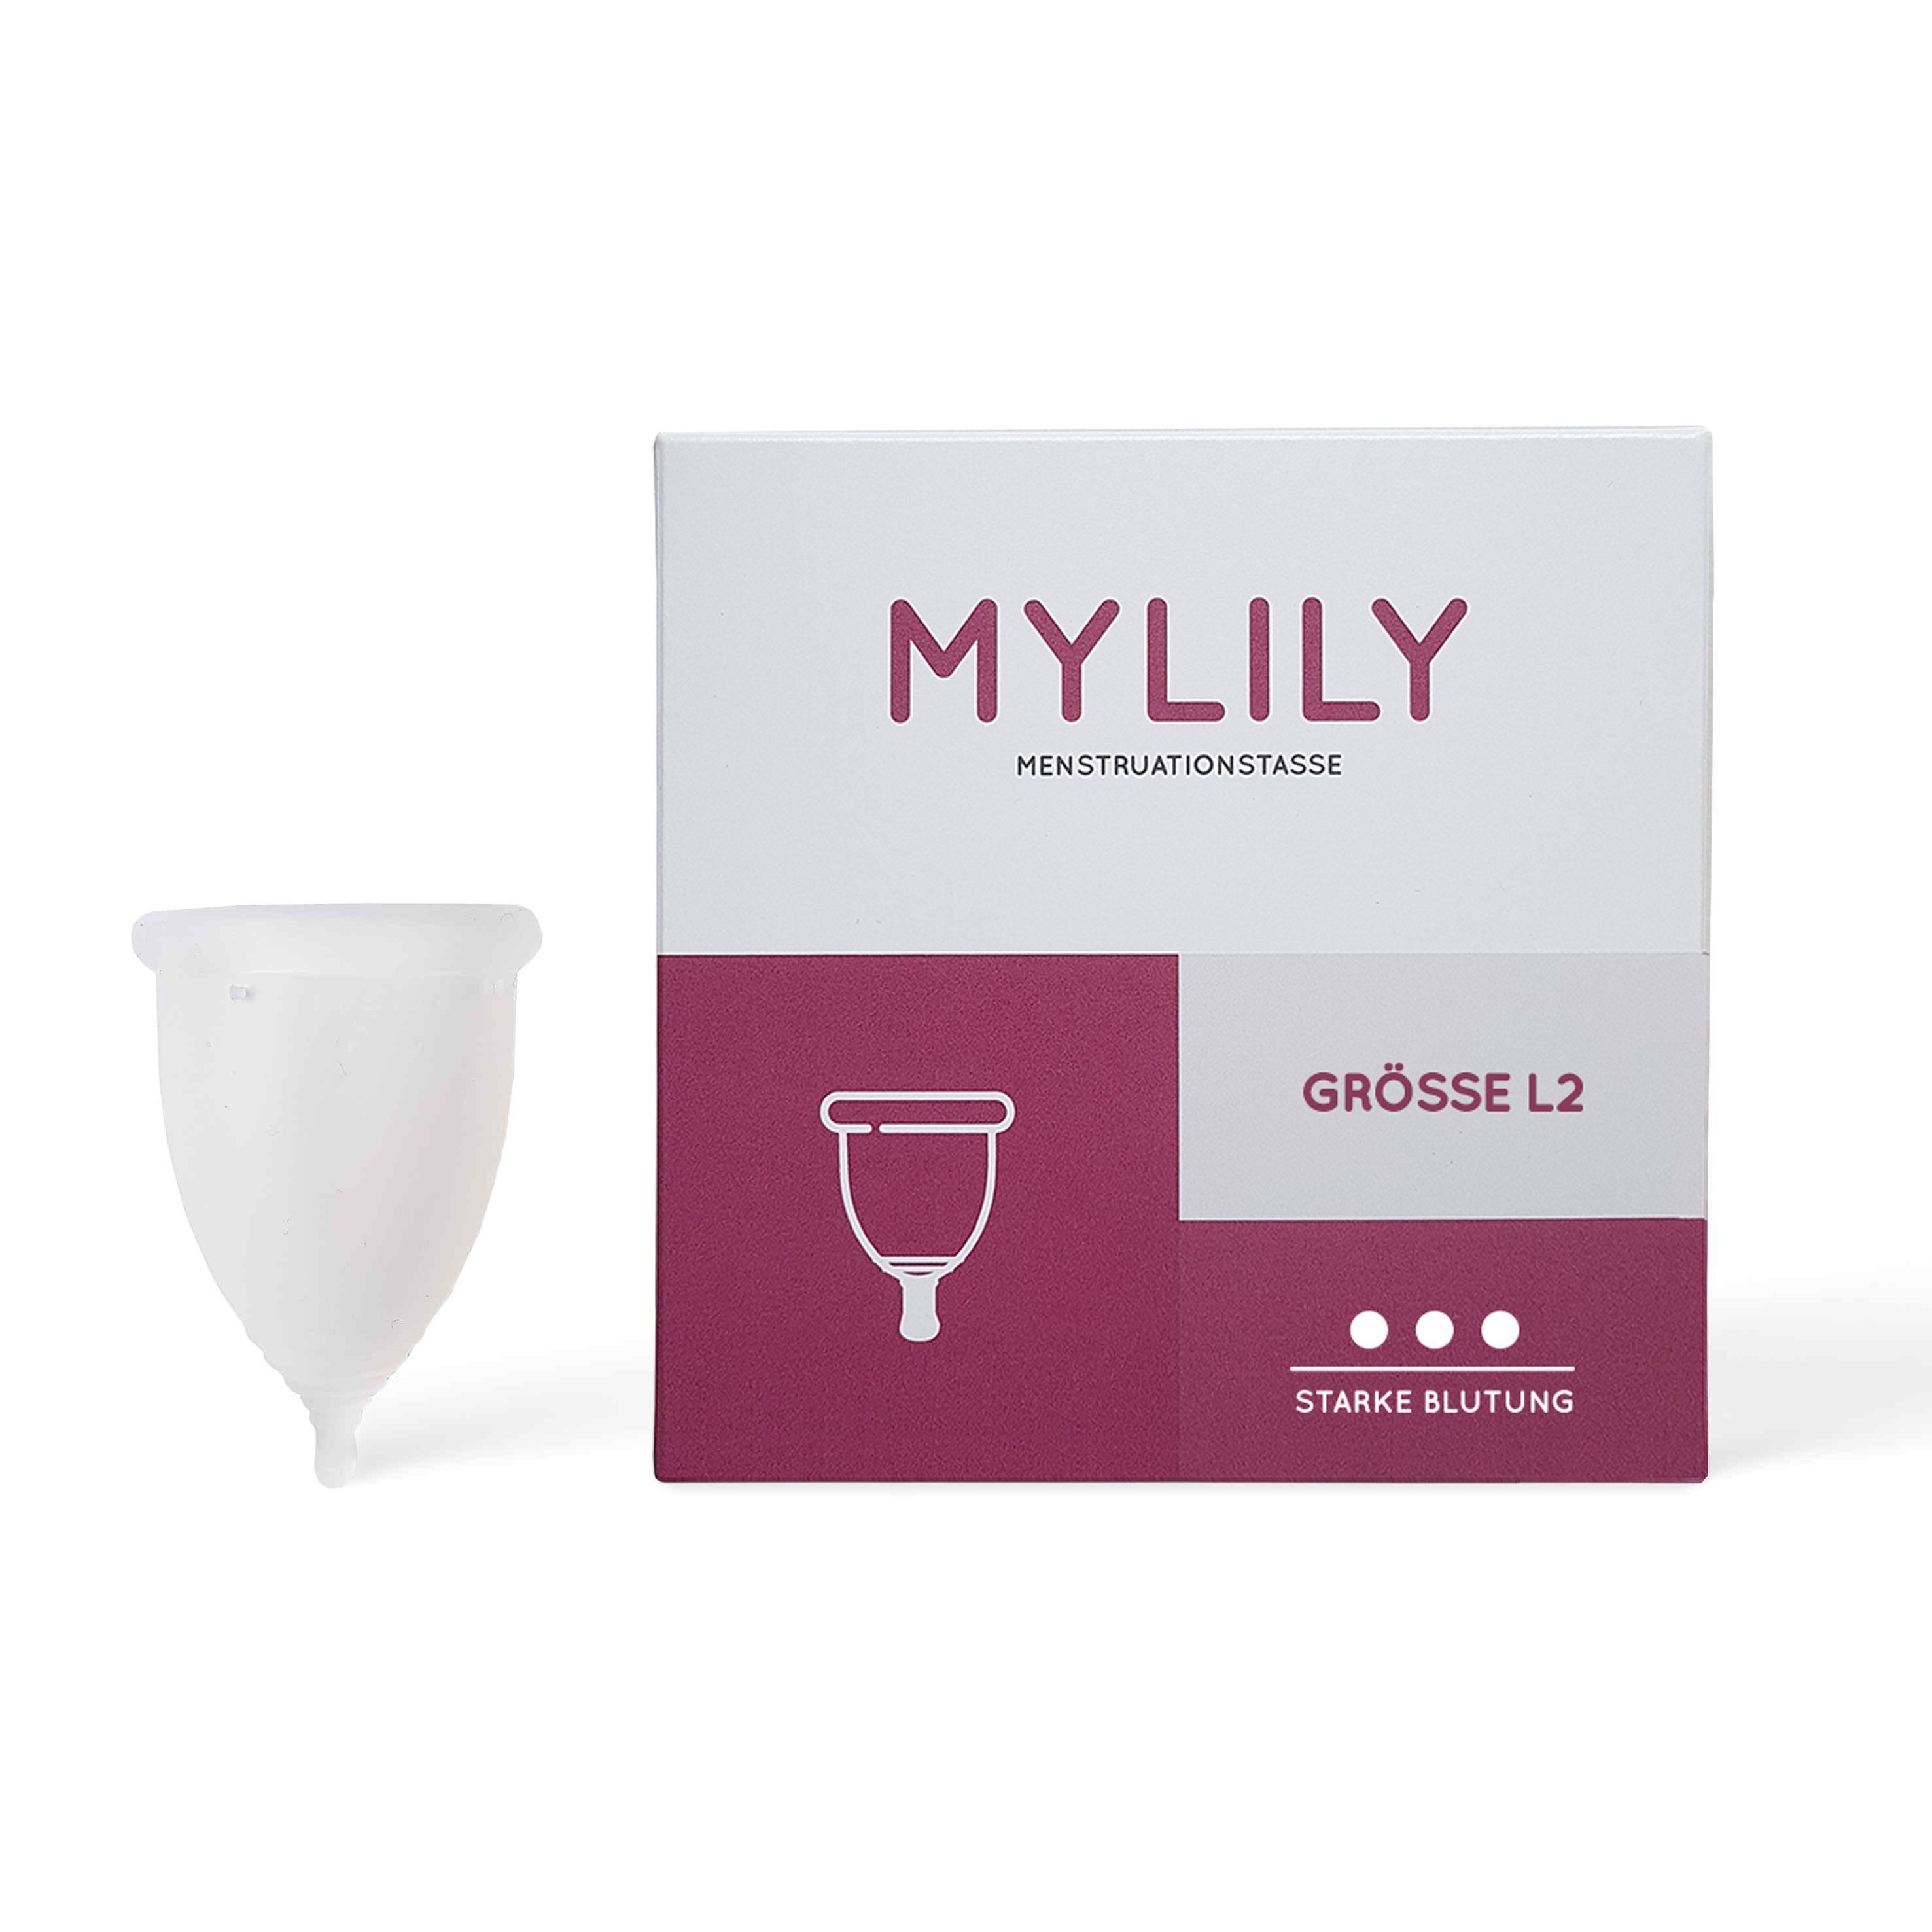 Mylily Menstruationstasse - L2